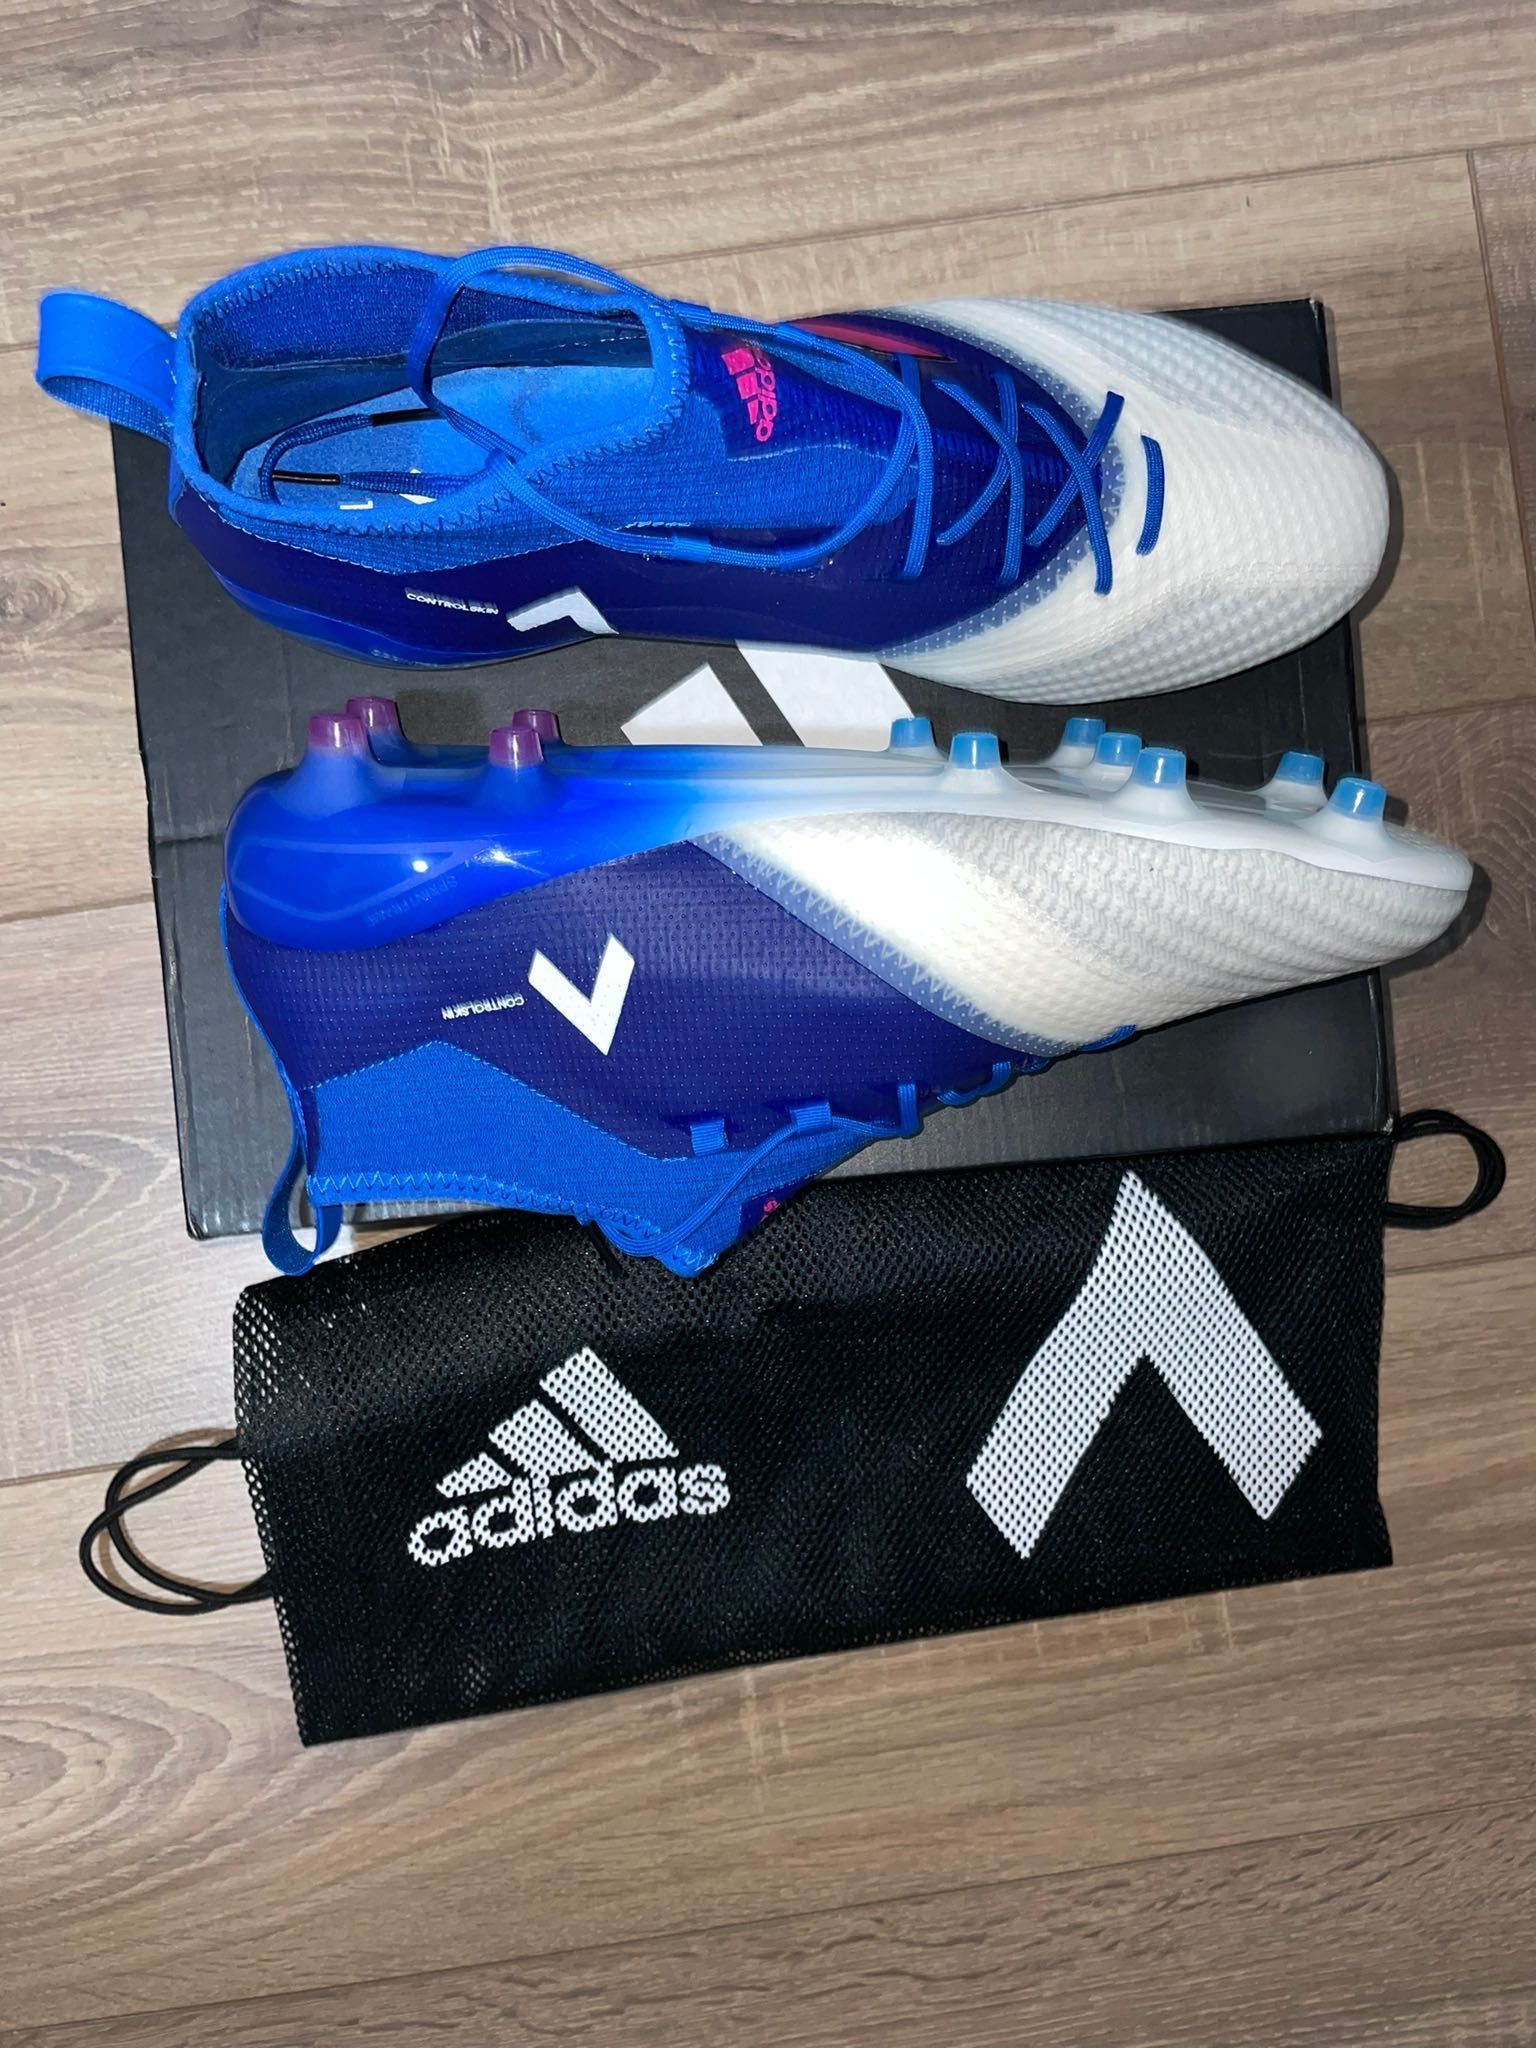 Adidas ace 17.1 primeknit Blue/shock pink /white